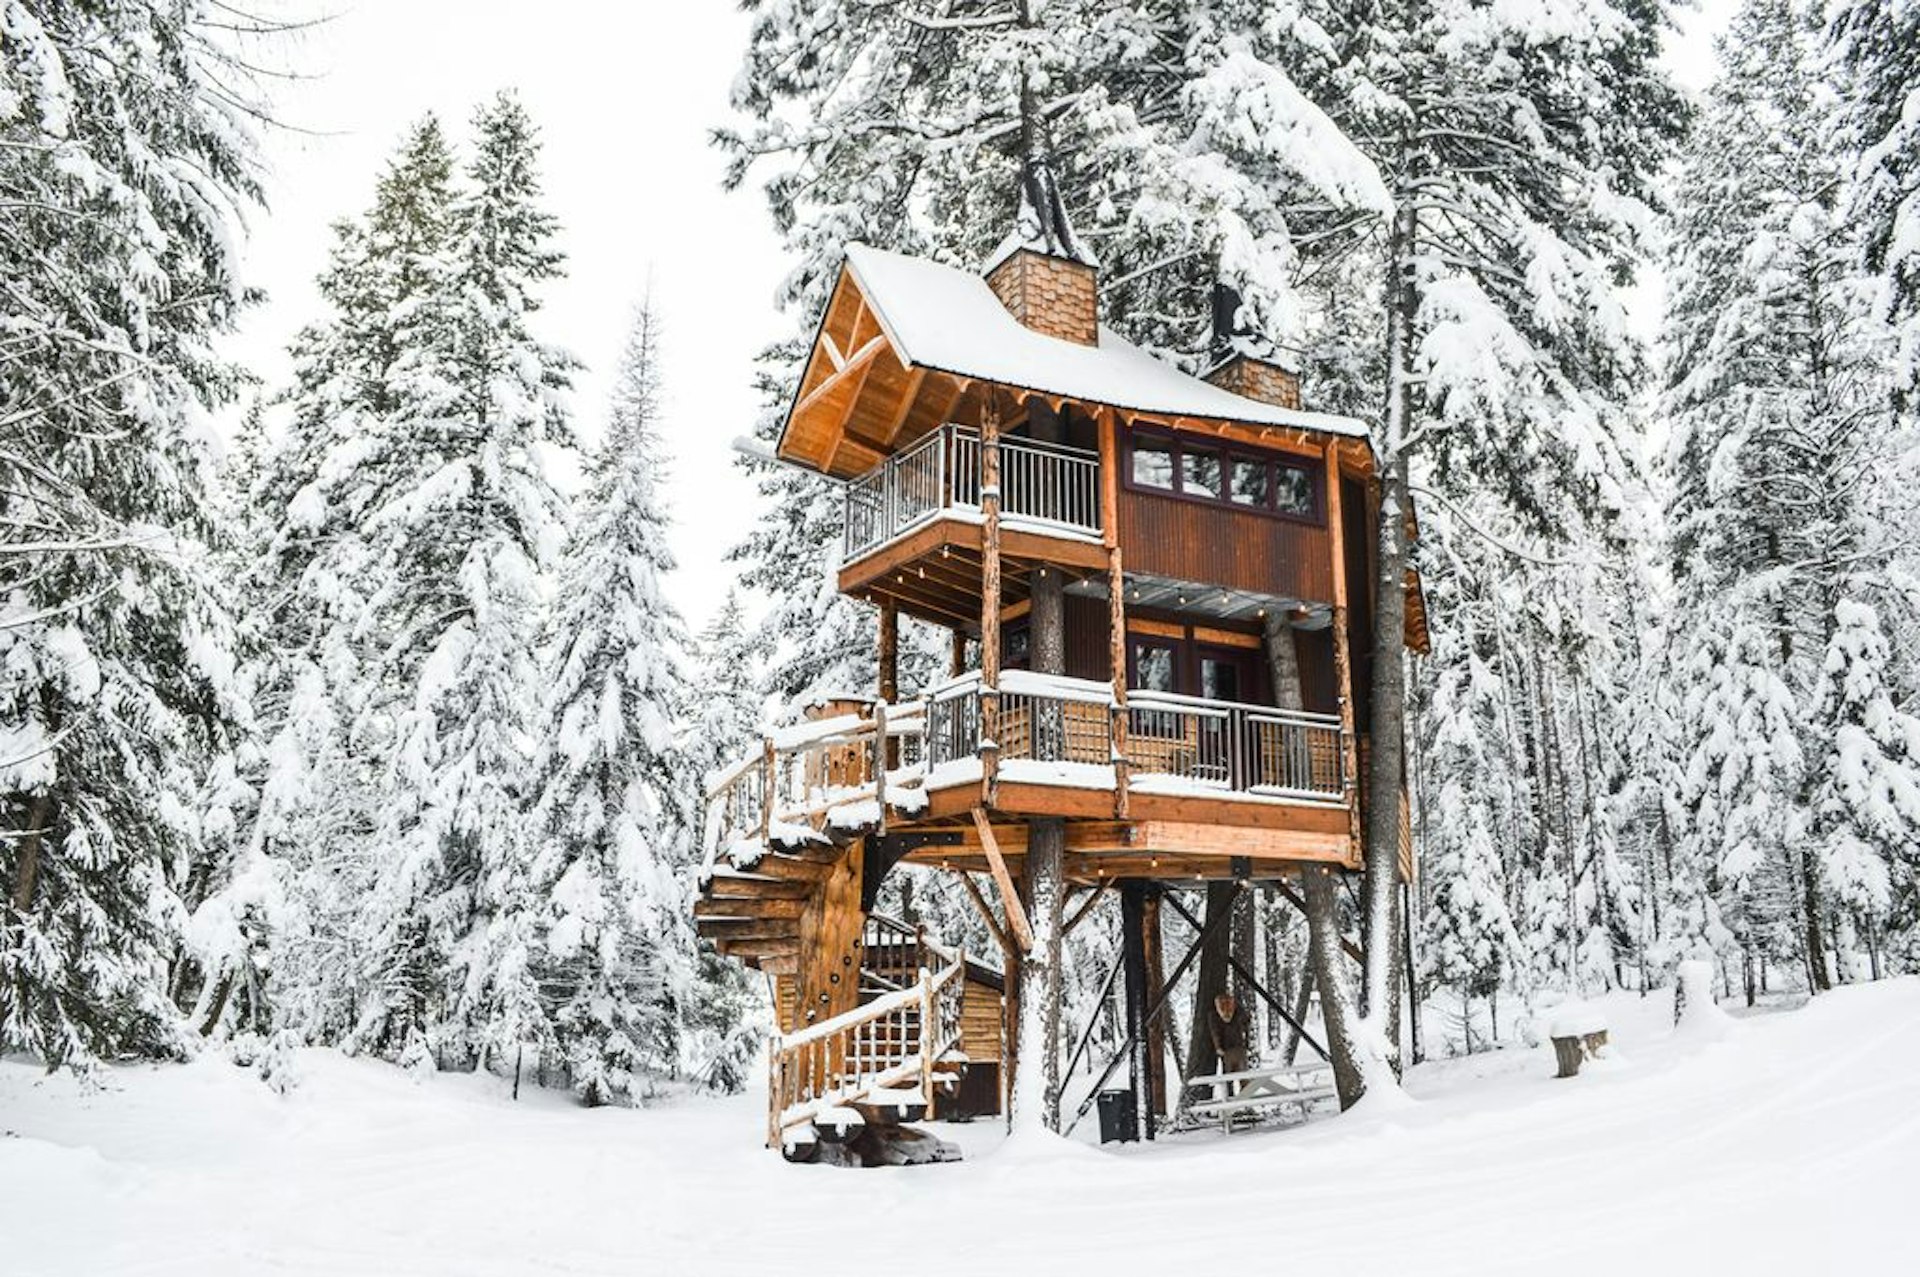 Luxury Treehouse Retreat in a snowy forest in Halfmoon, Montana